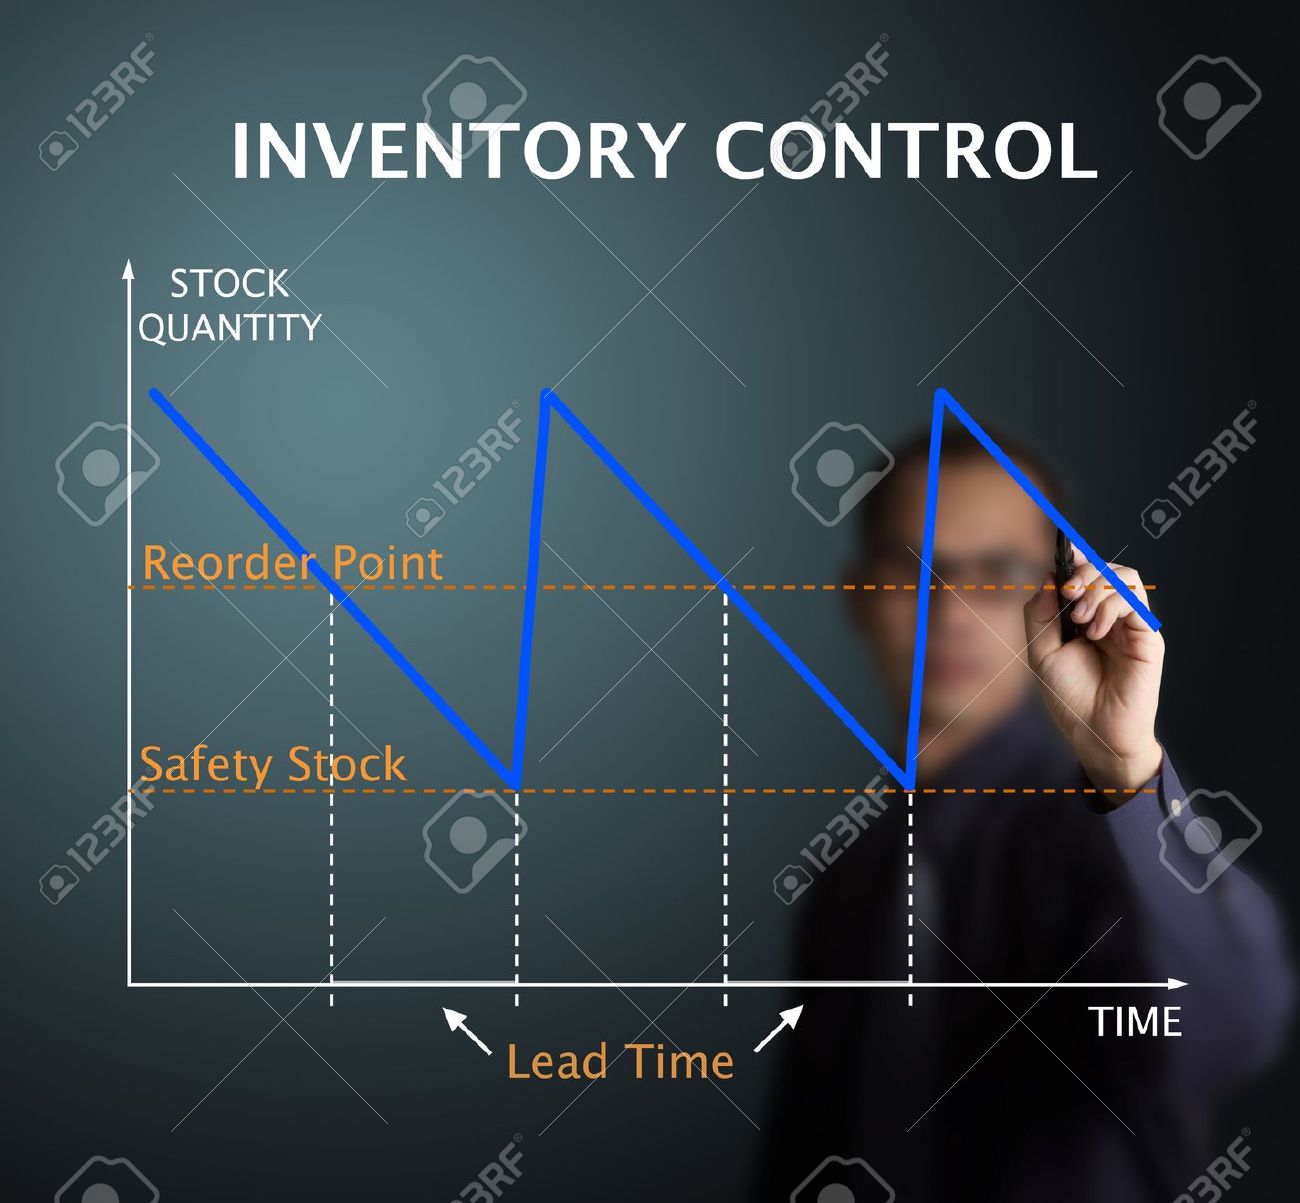 Inventory Control